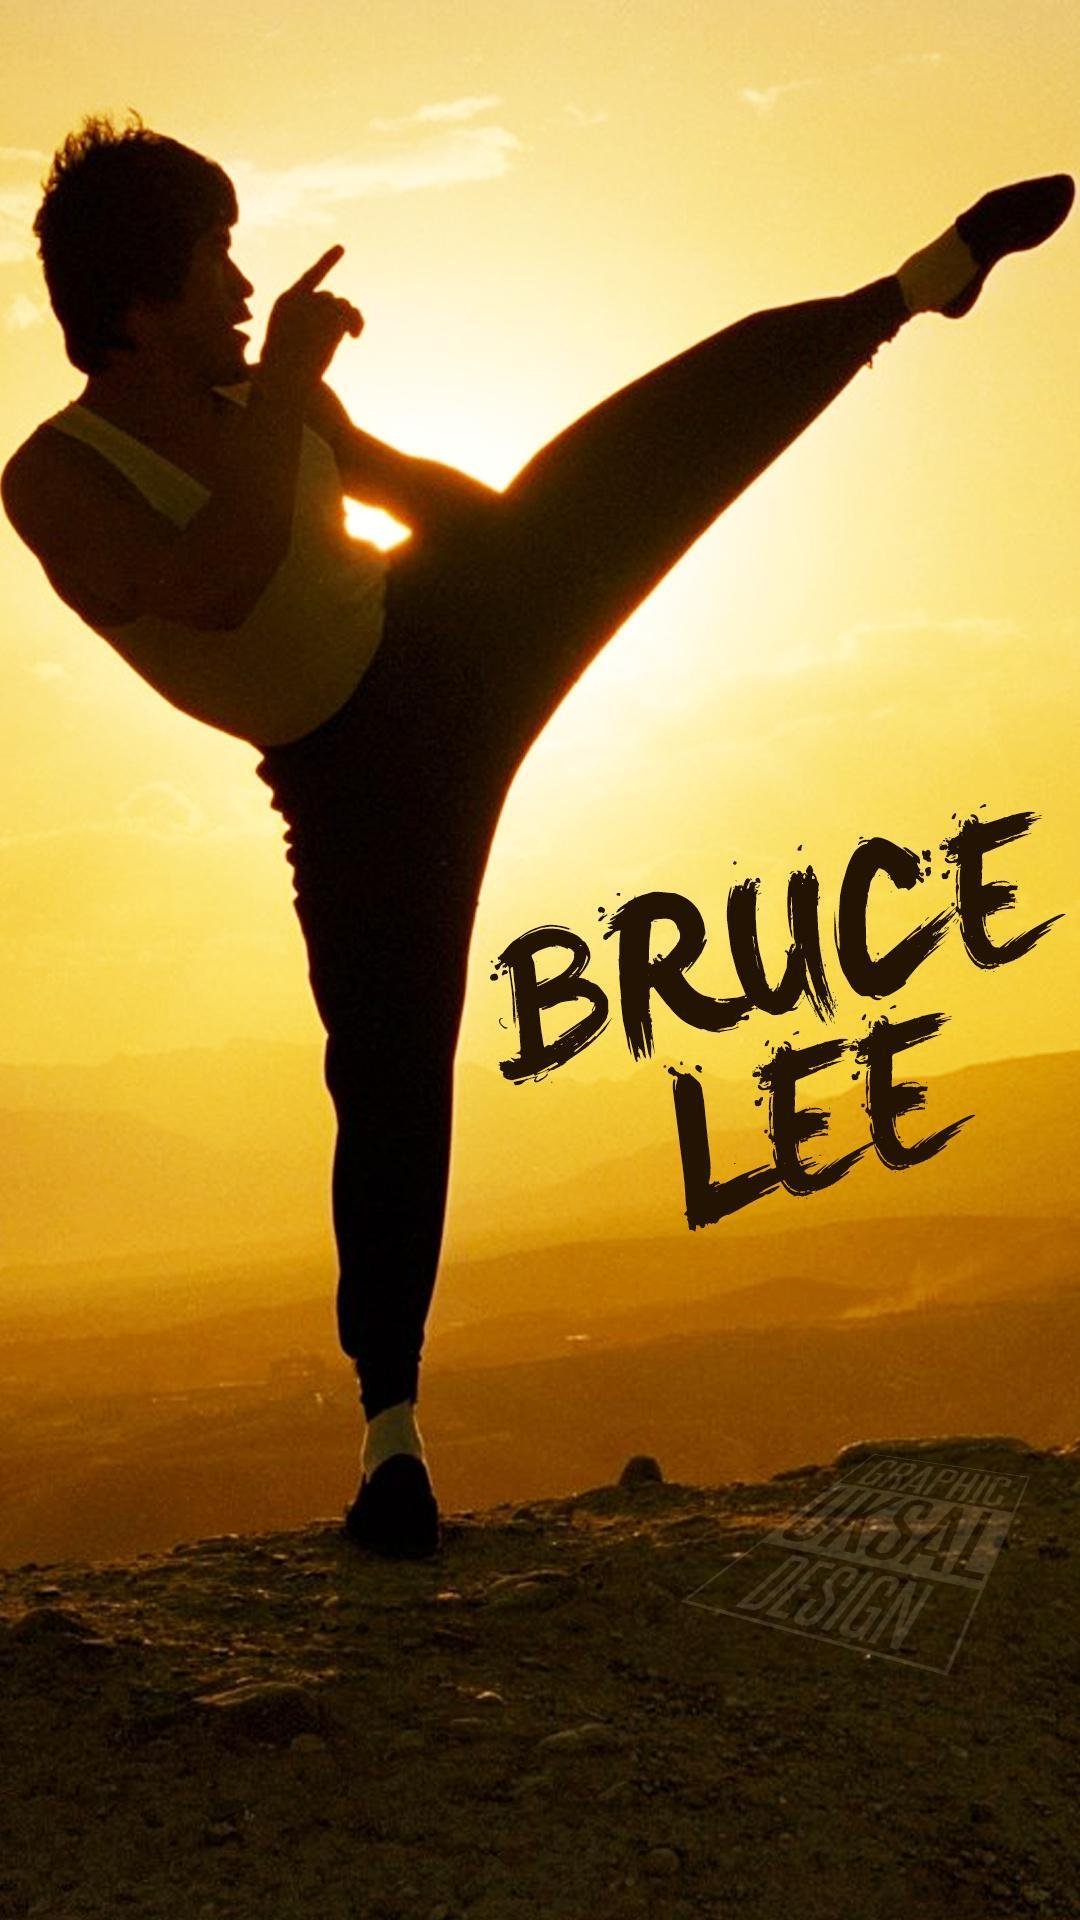 Bruce lee Wallpaper Download | MobCup